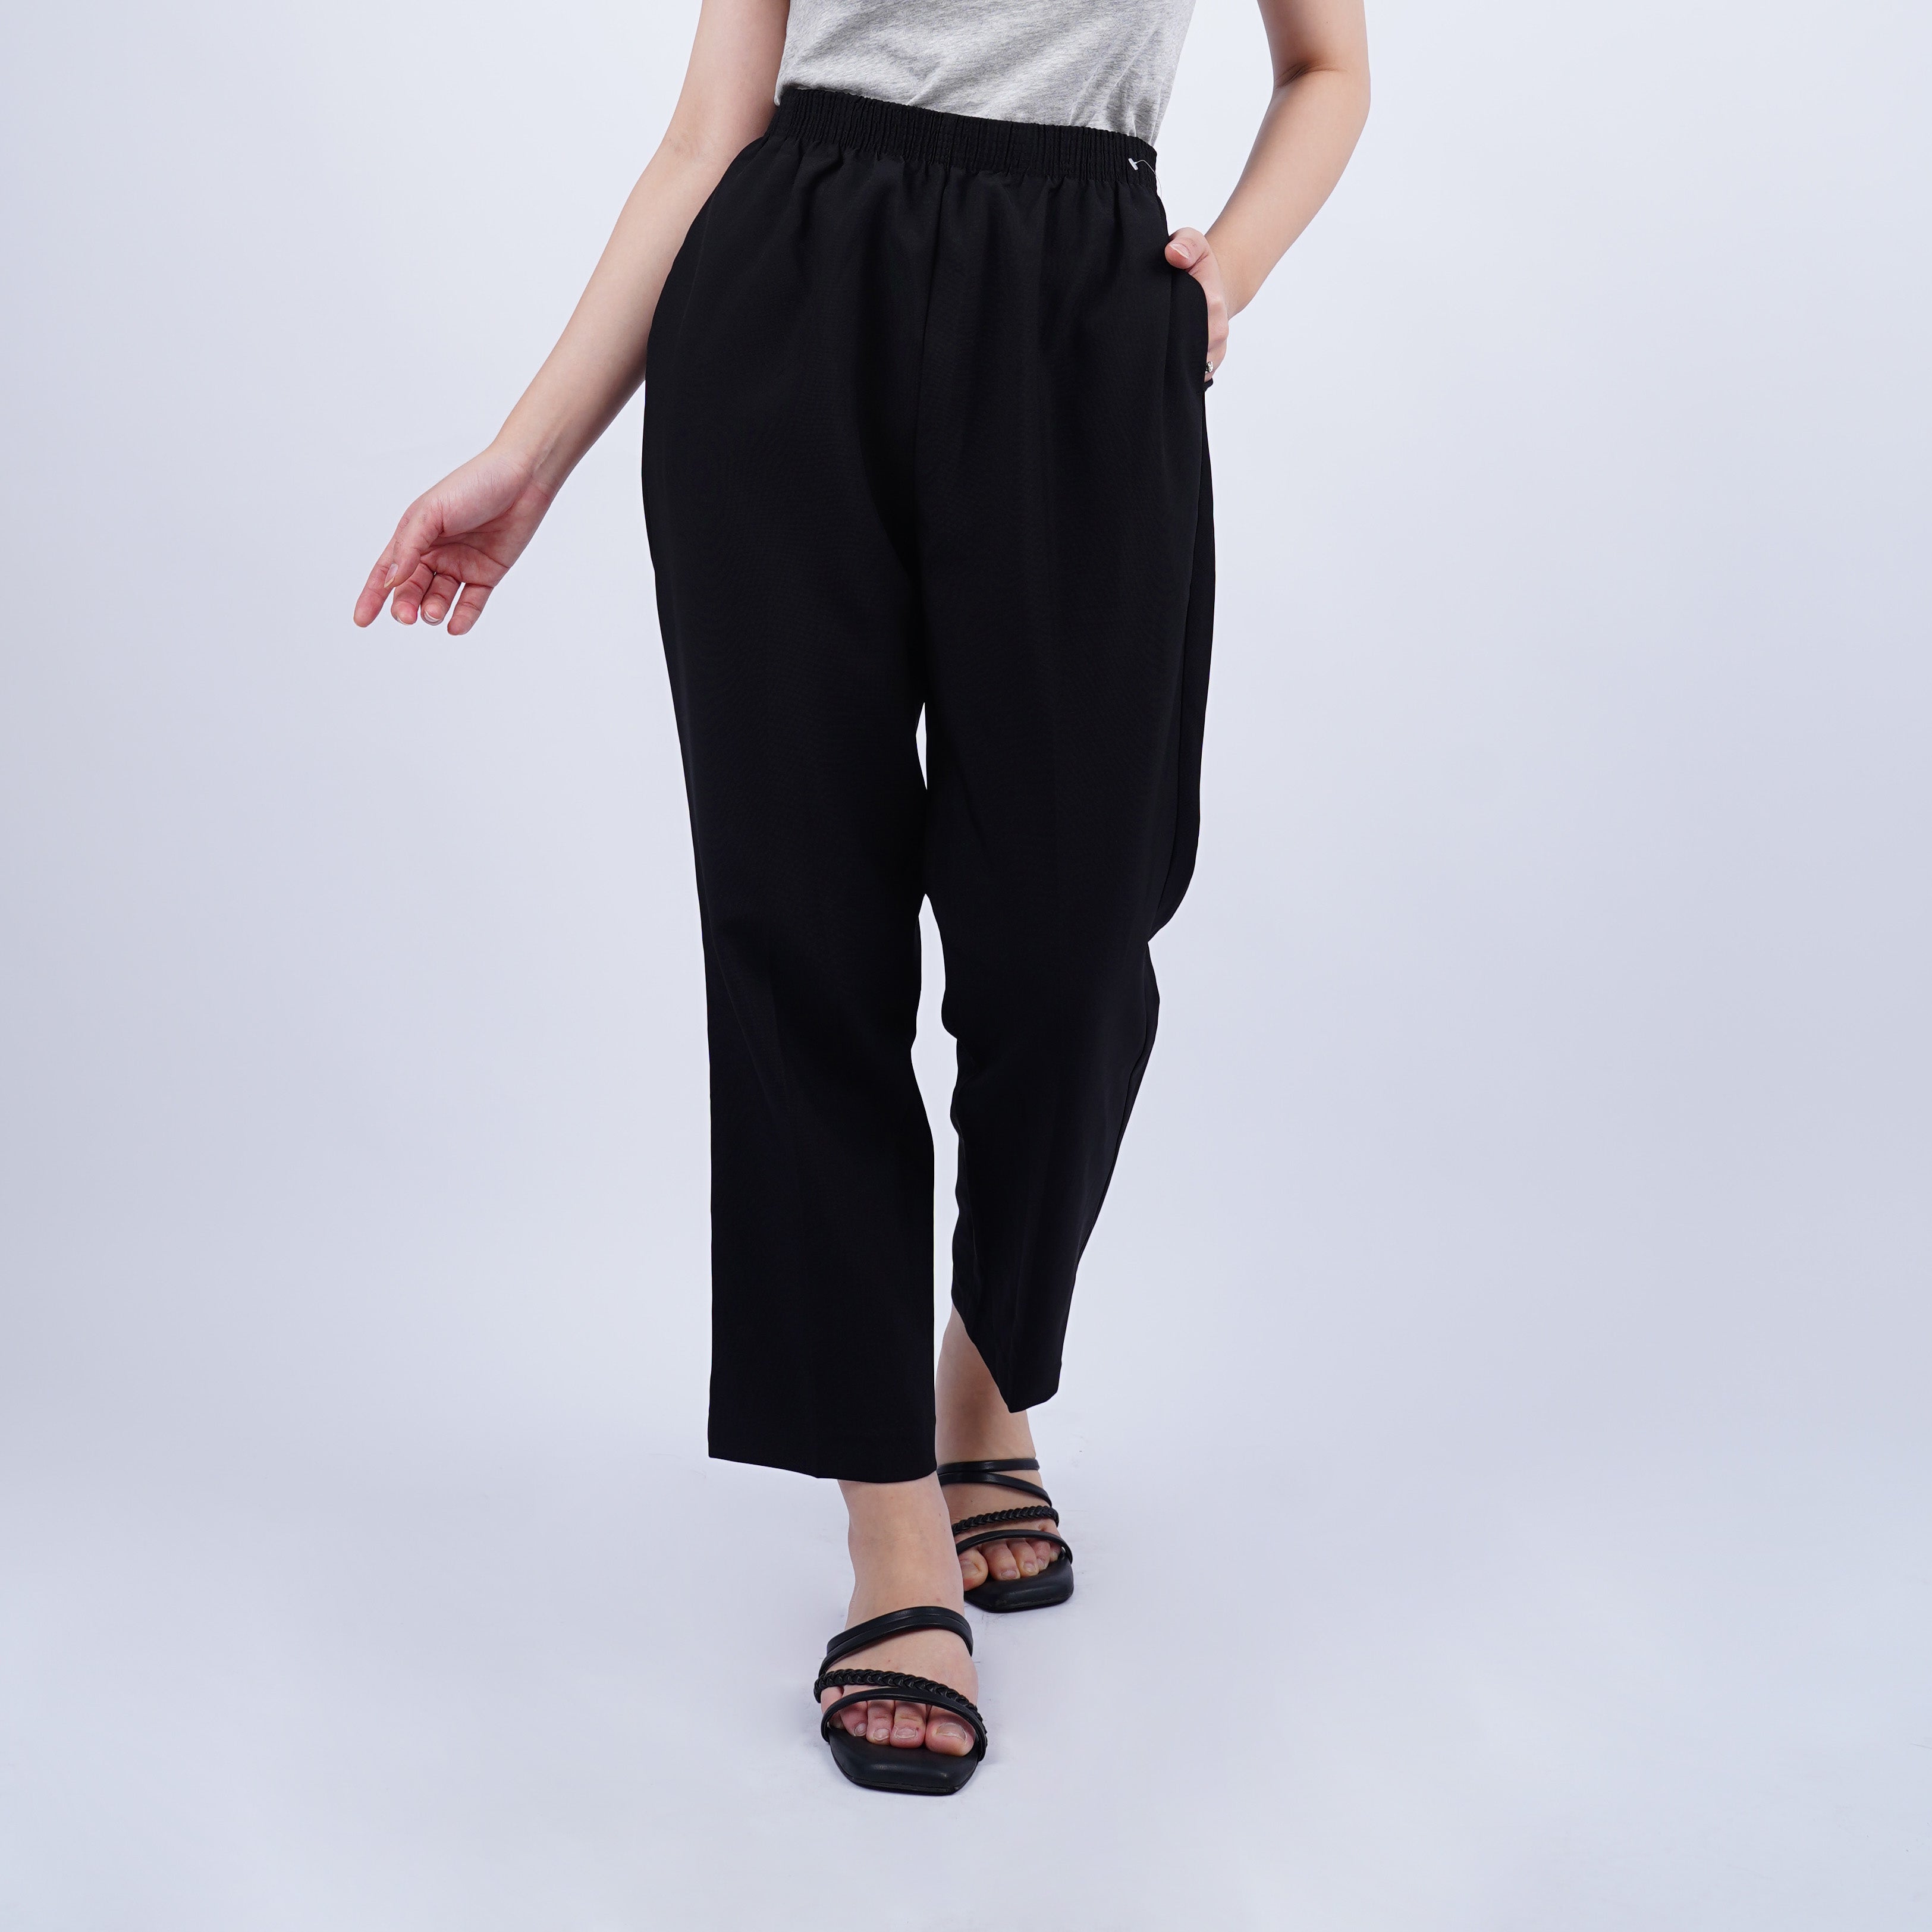 Celana Panjang Wanita Comfort Fit Pants [CG-TAN 02]